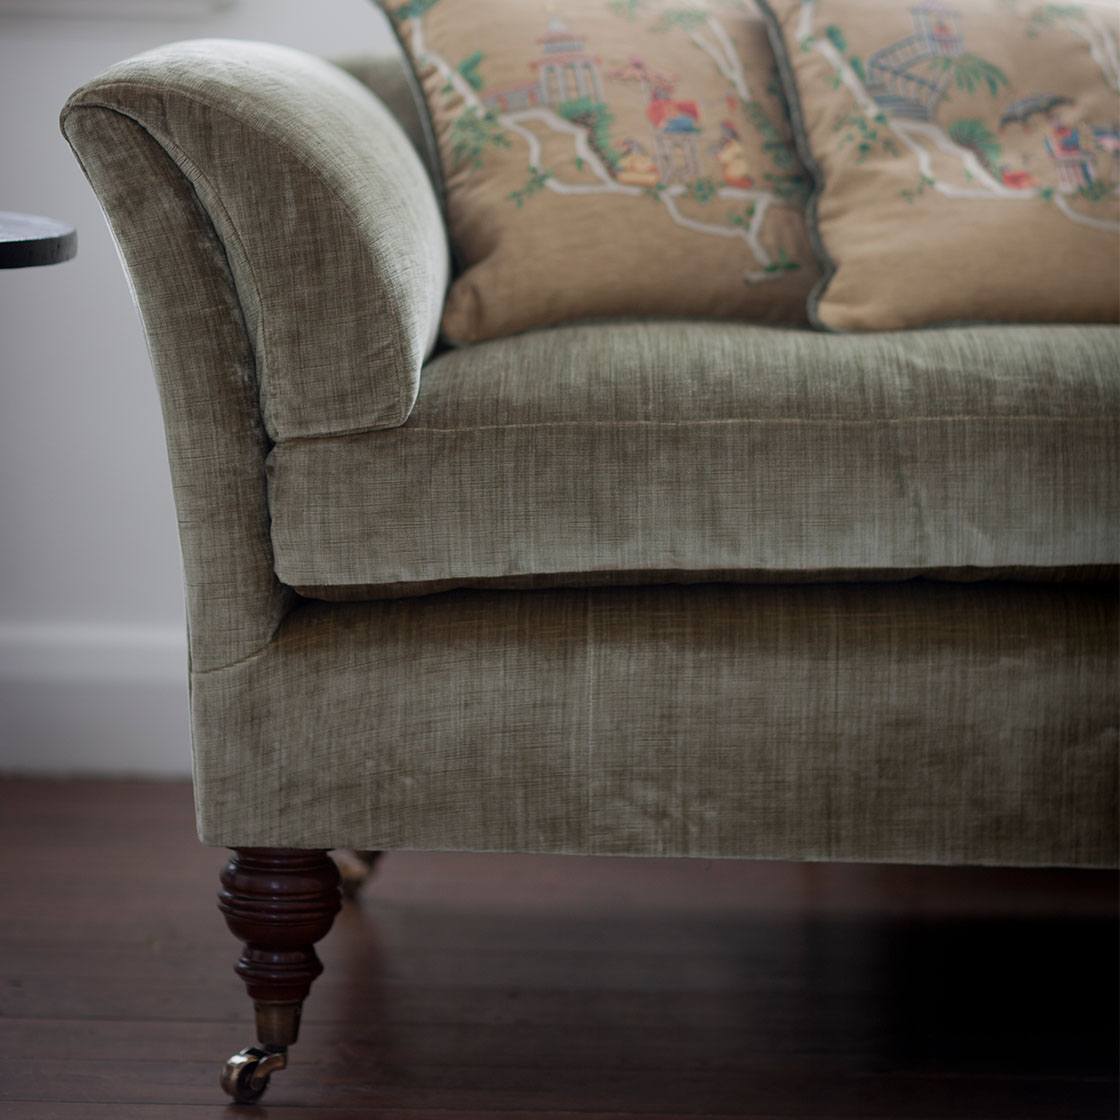 Pompadour low back sofa in Como silk velvet - Moss - Beaumont & Fletcher